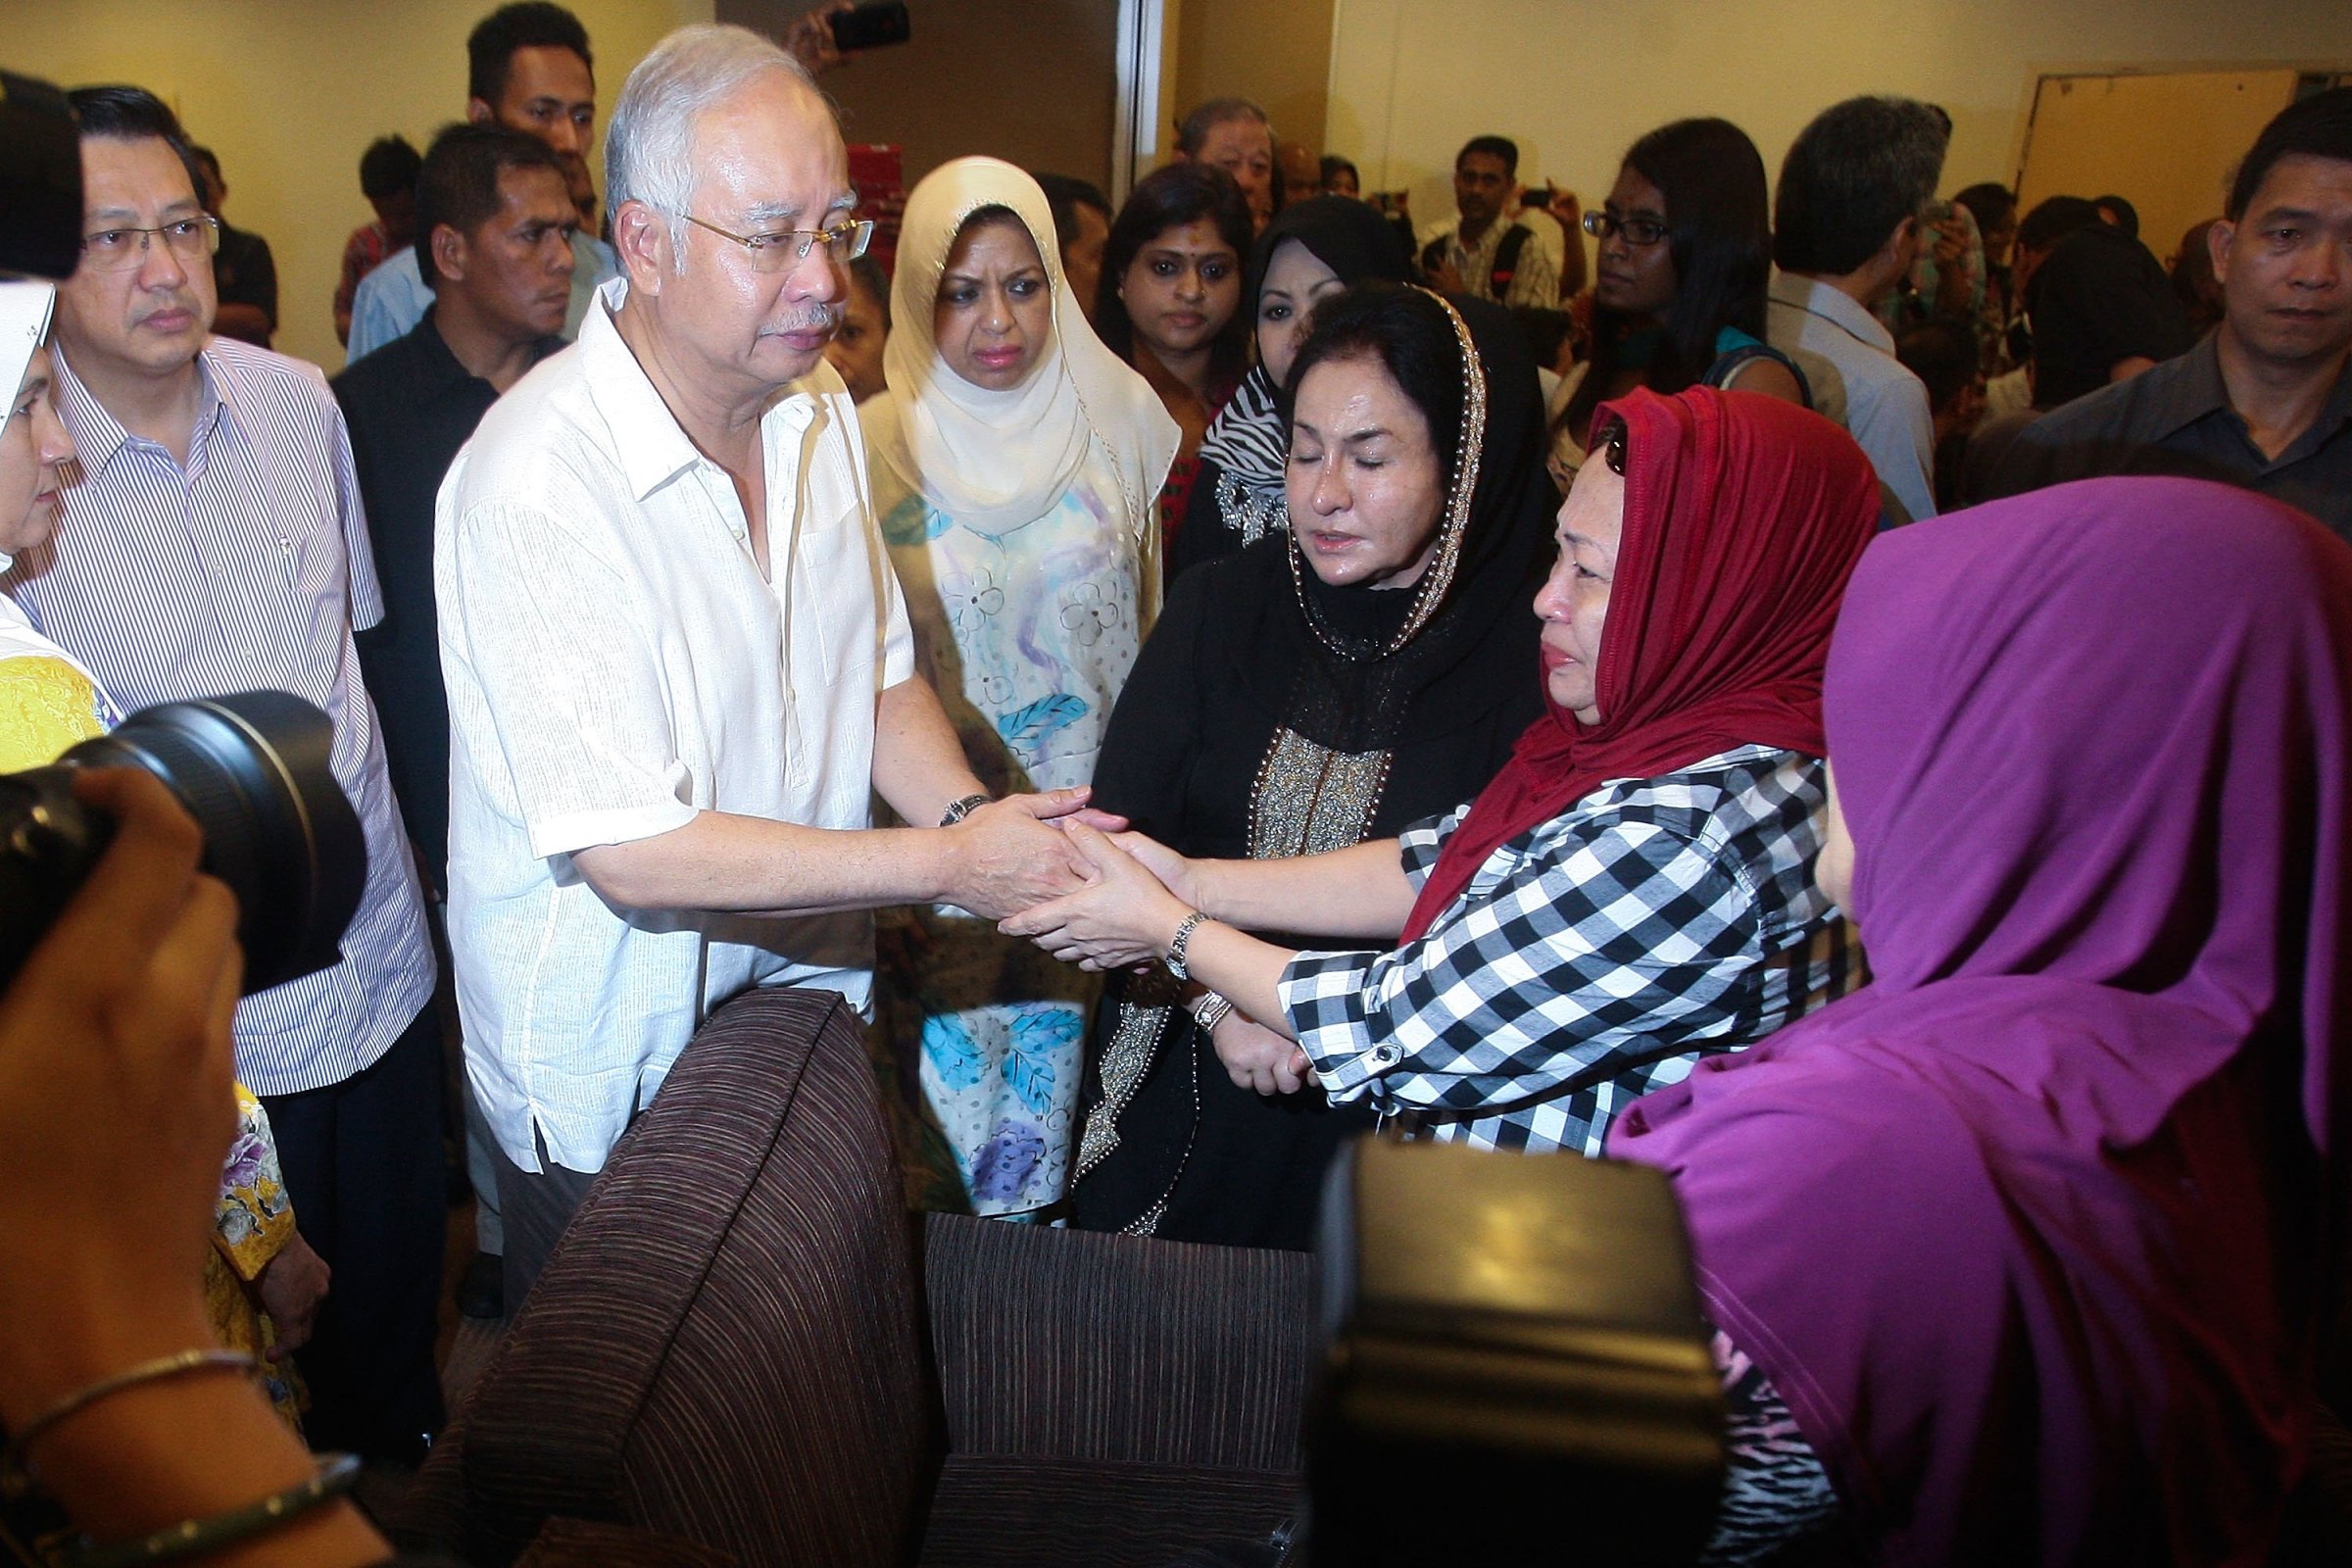 Malaysian Prime Minister Najib Razak and his wife Rosmah Mansor meet family members of the MH17 victim on July 19, 2014 in Kuala Lumpur, Malaysia.